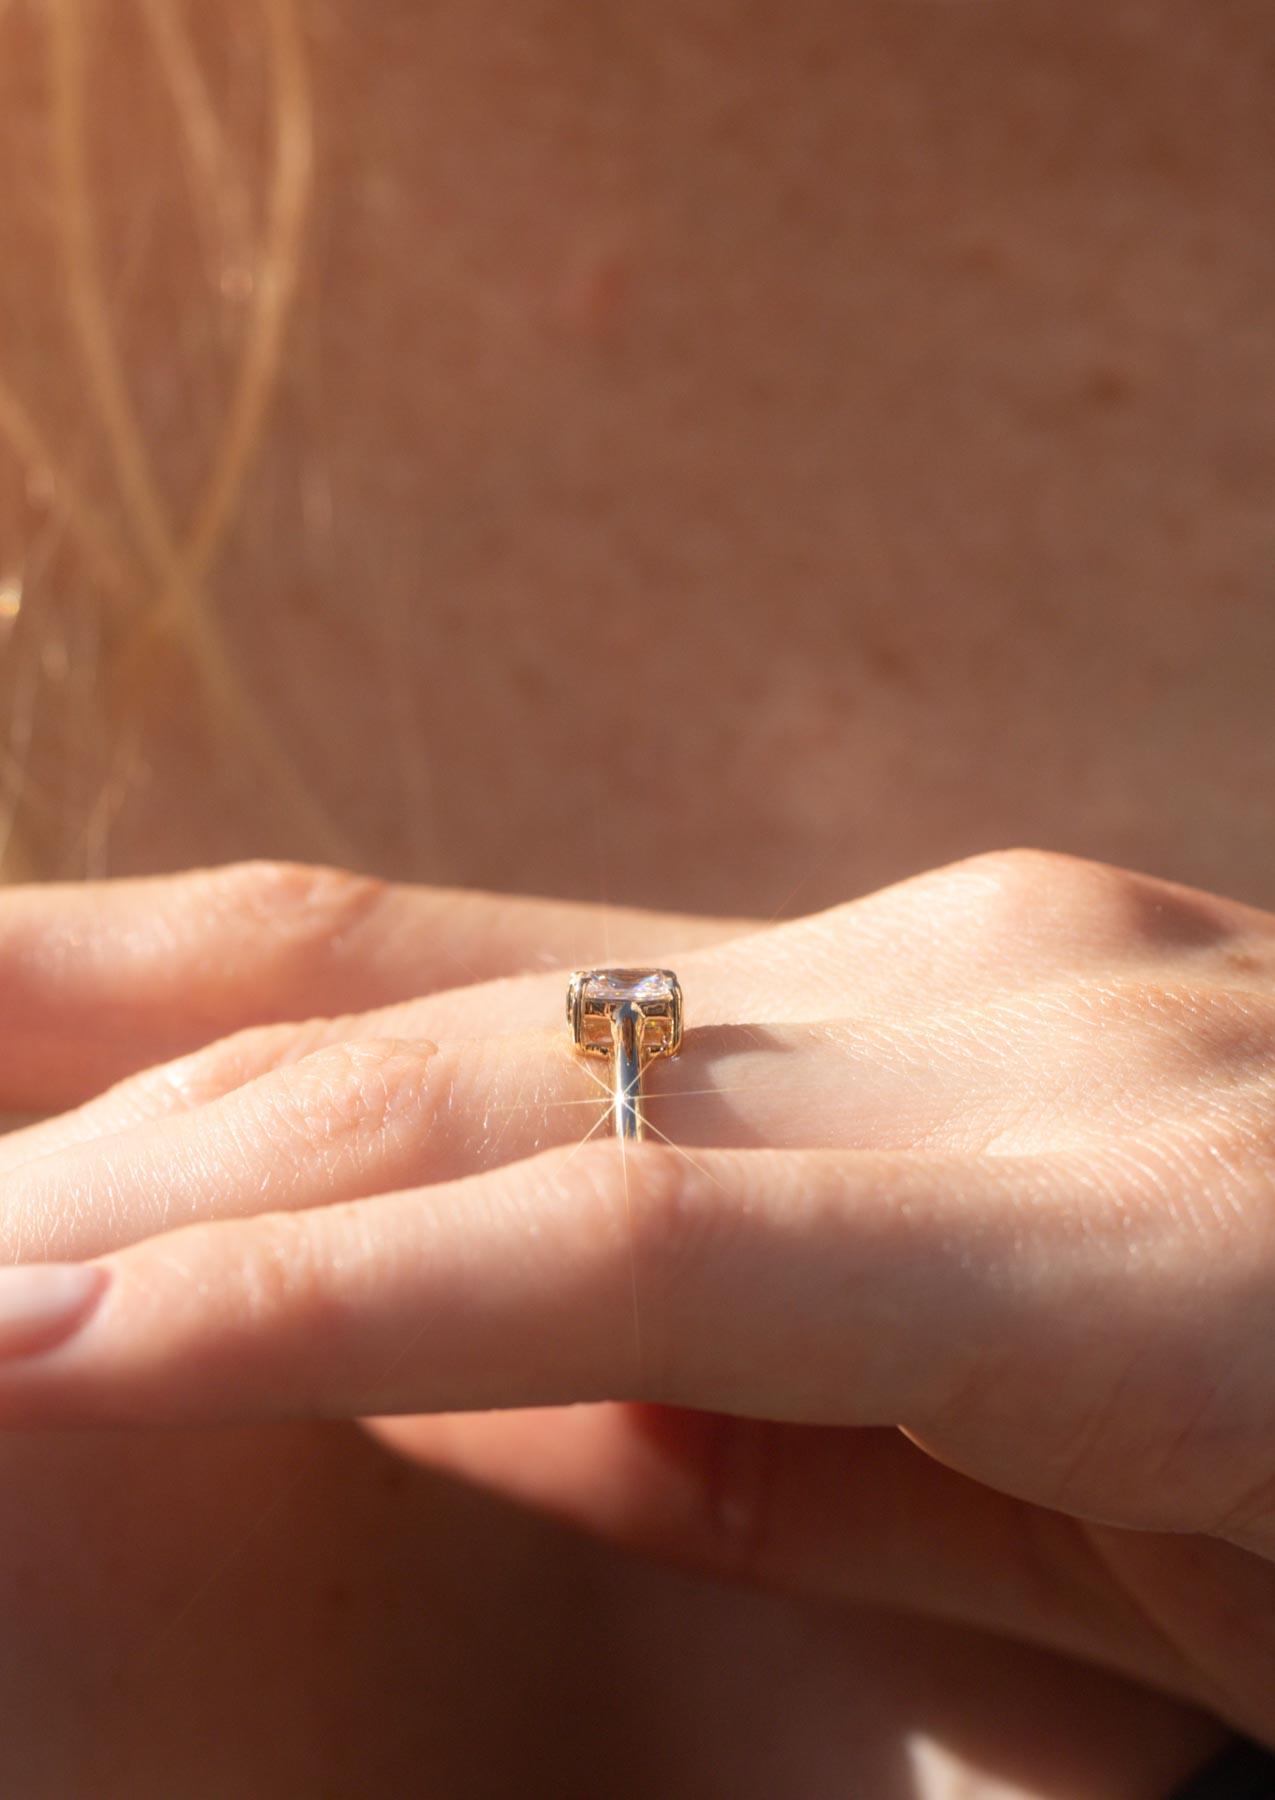 The Toi Et Moi Rose Gold Cultured Diamond Ring